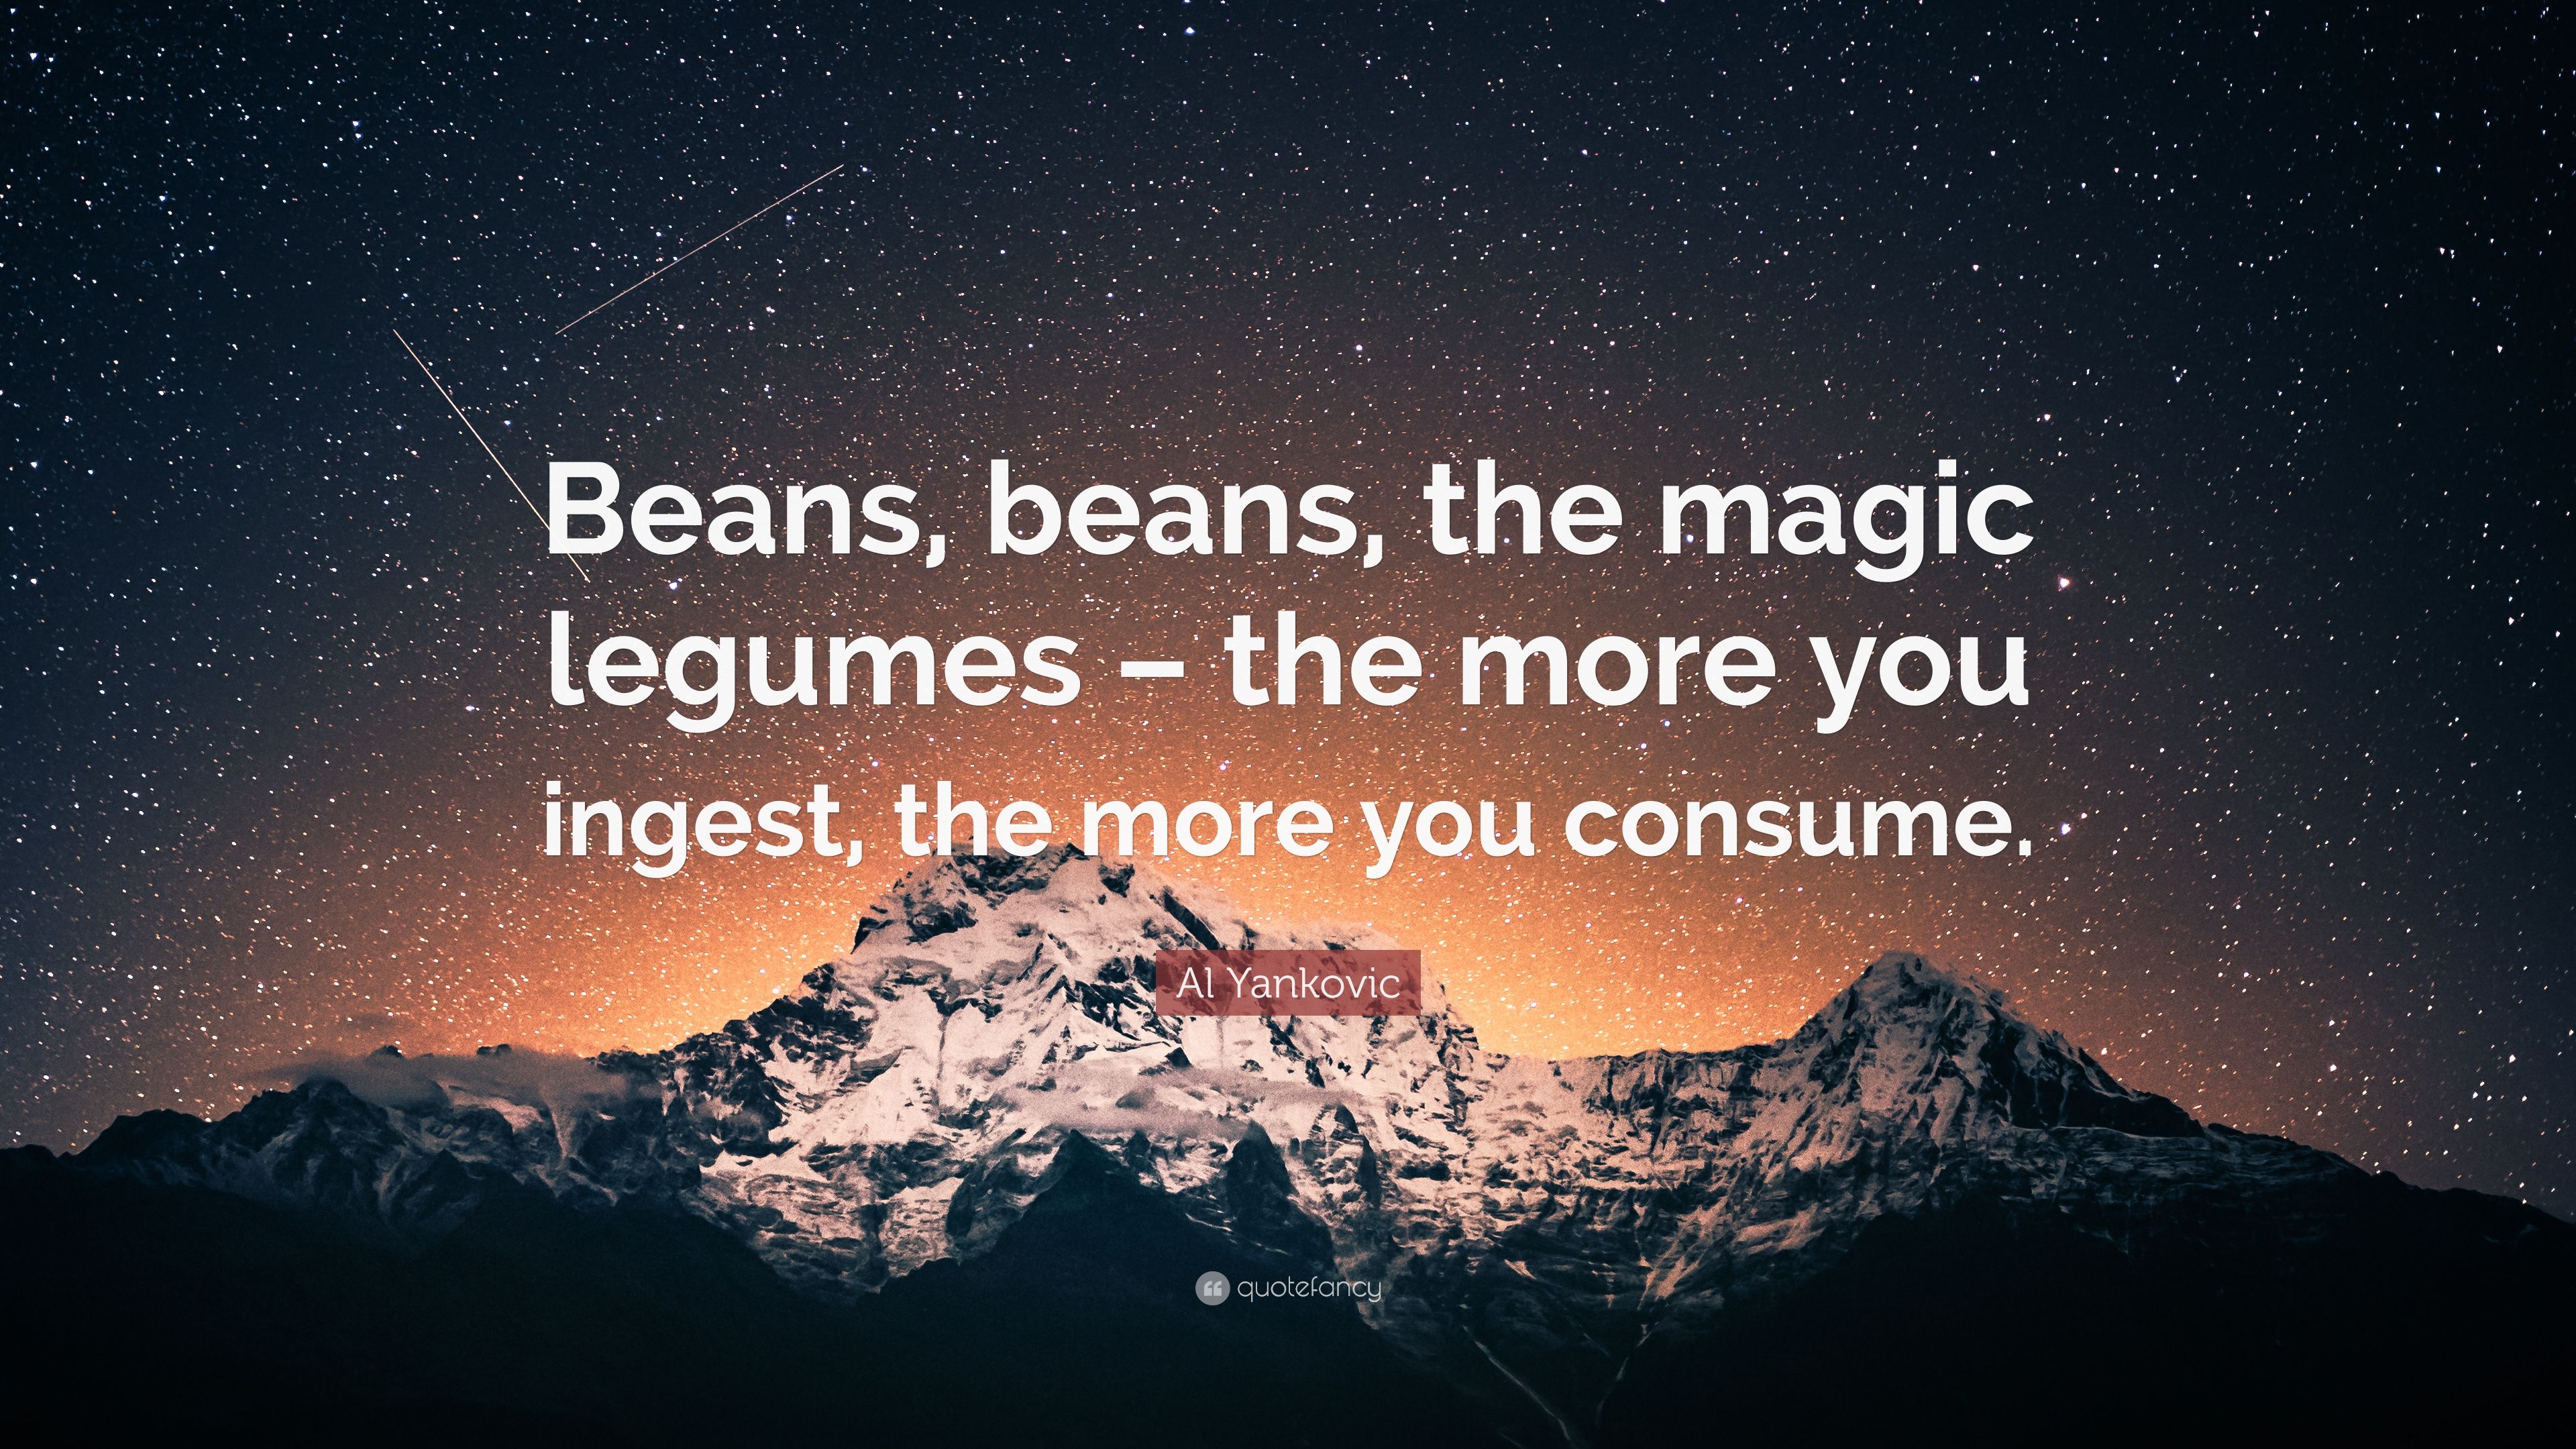 Al Yankovic Quote: “Beans, beans, the magic legumes